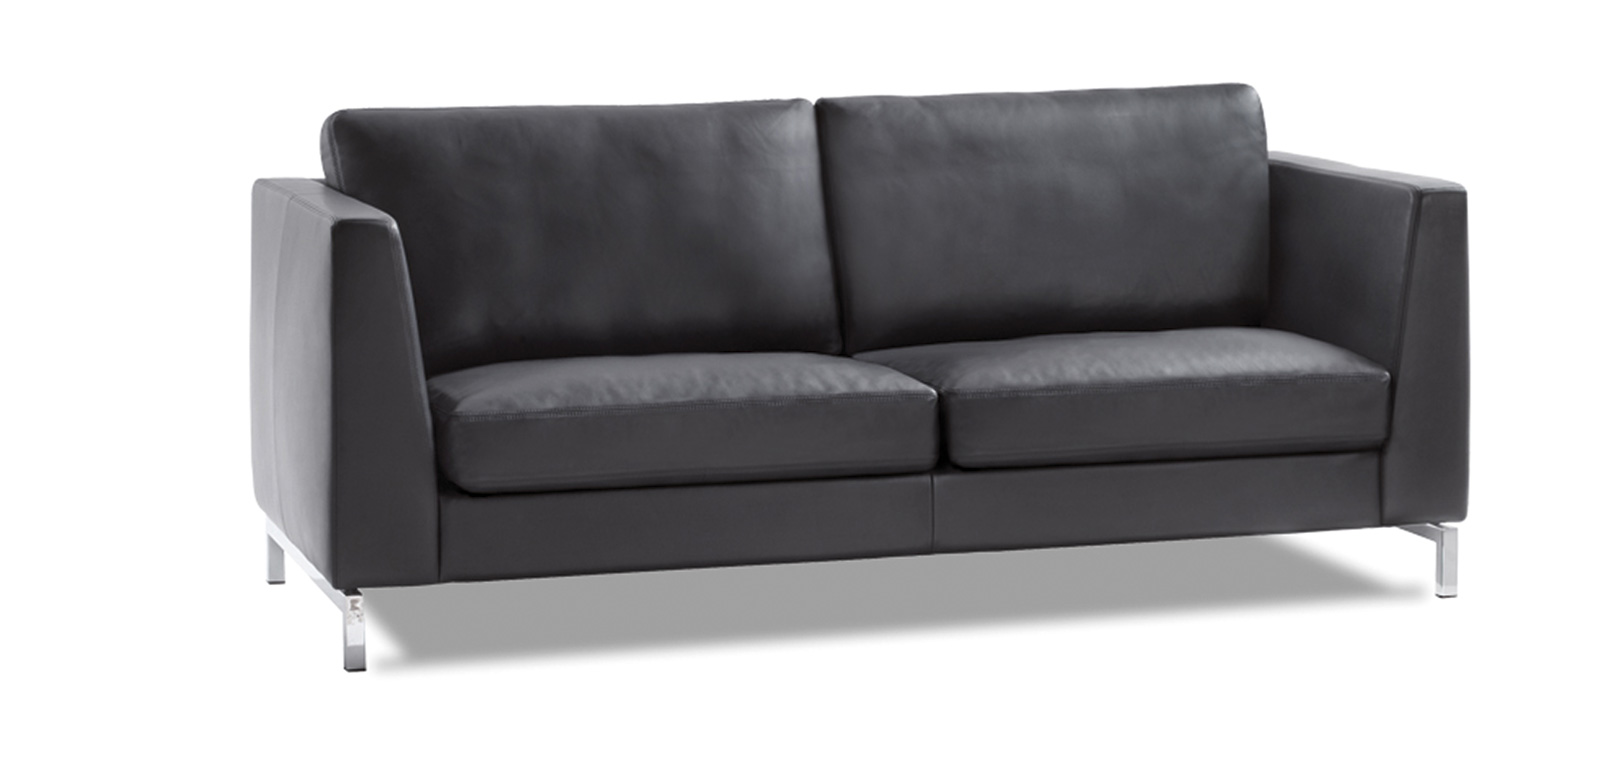 CL850 Sofa aus schwarzem Leder mit Chromfüßen